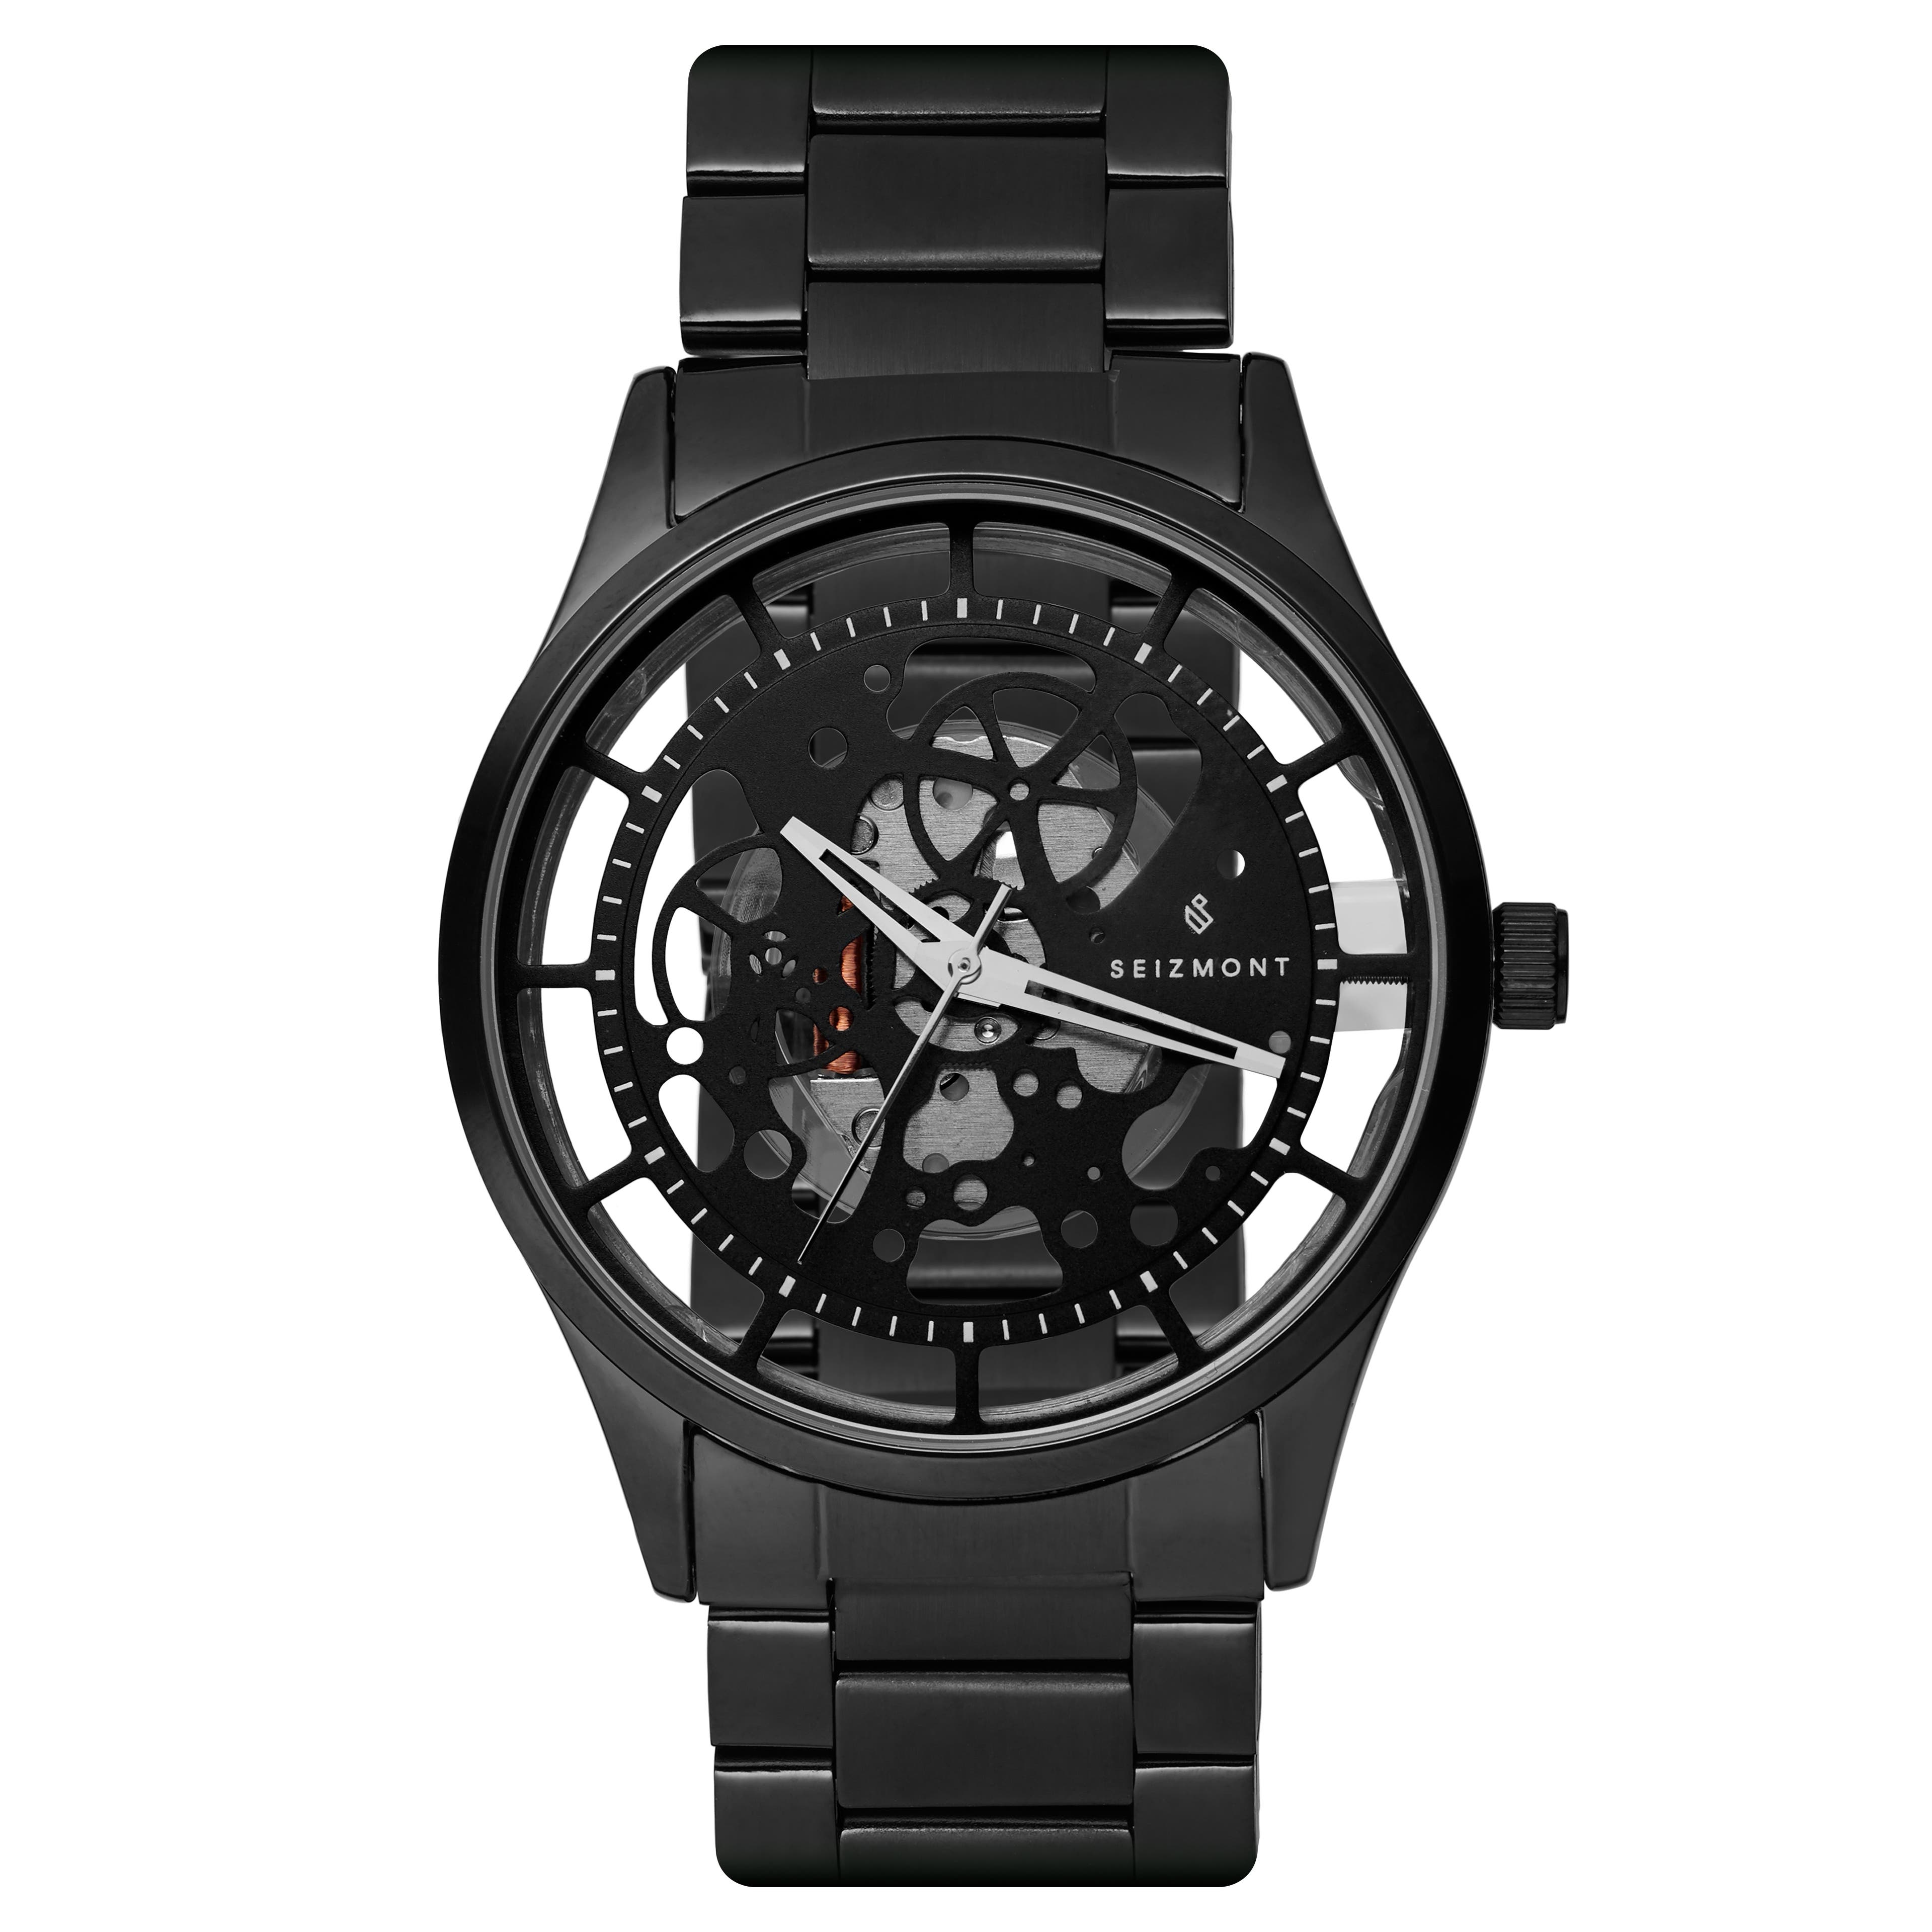 Phantom, Black Stainless Steel Skeleton Watch With Black Dial, In stock!